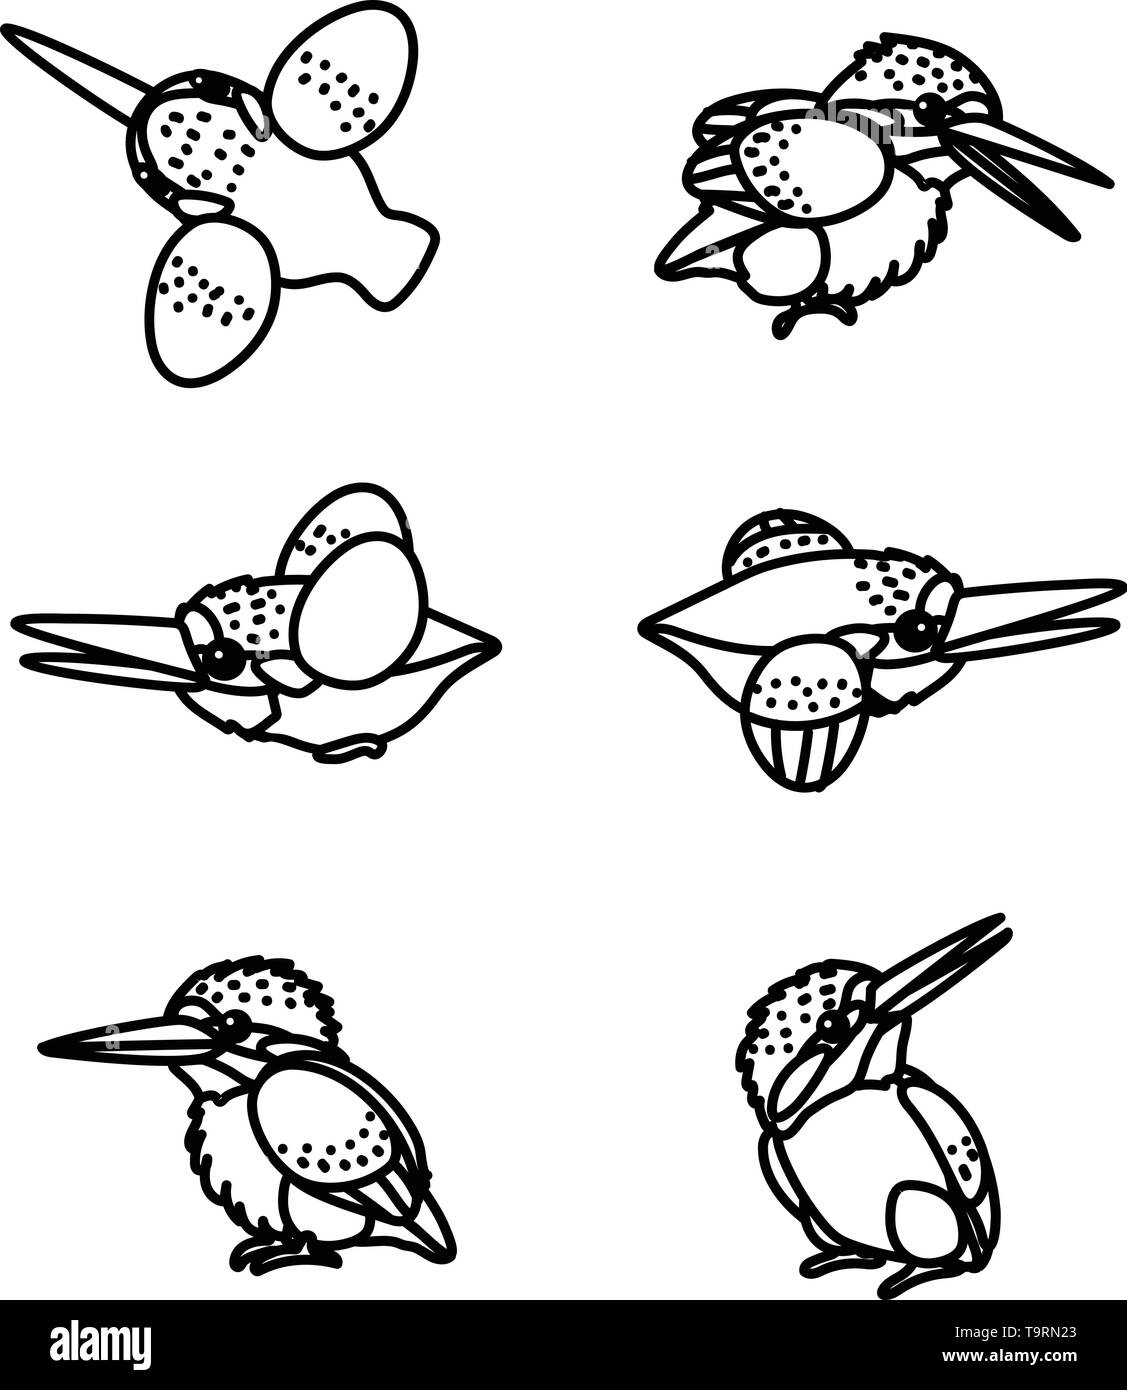 Vektorlinie cartoon animal Clipart kingfisher Vögel gesetzt Stock Vektor